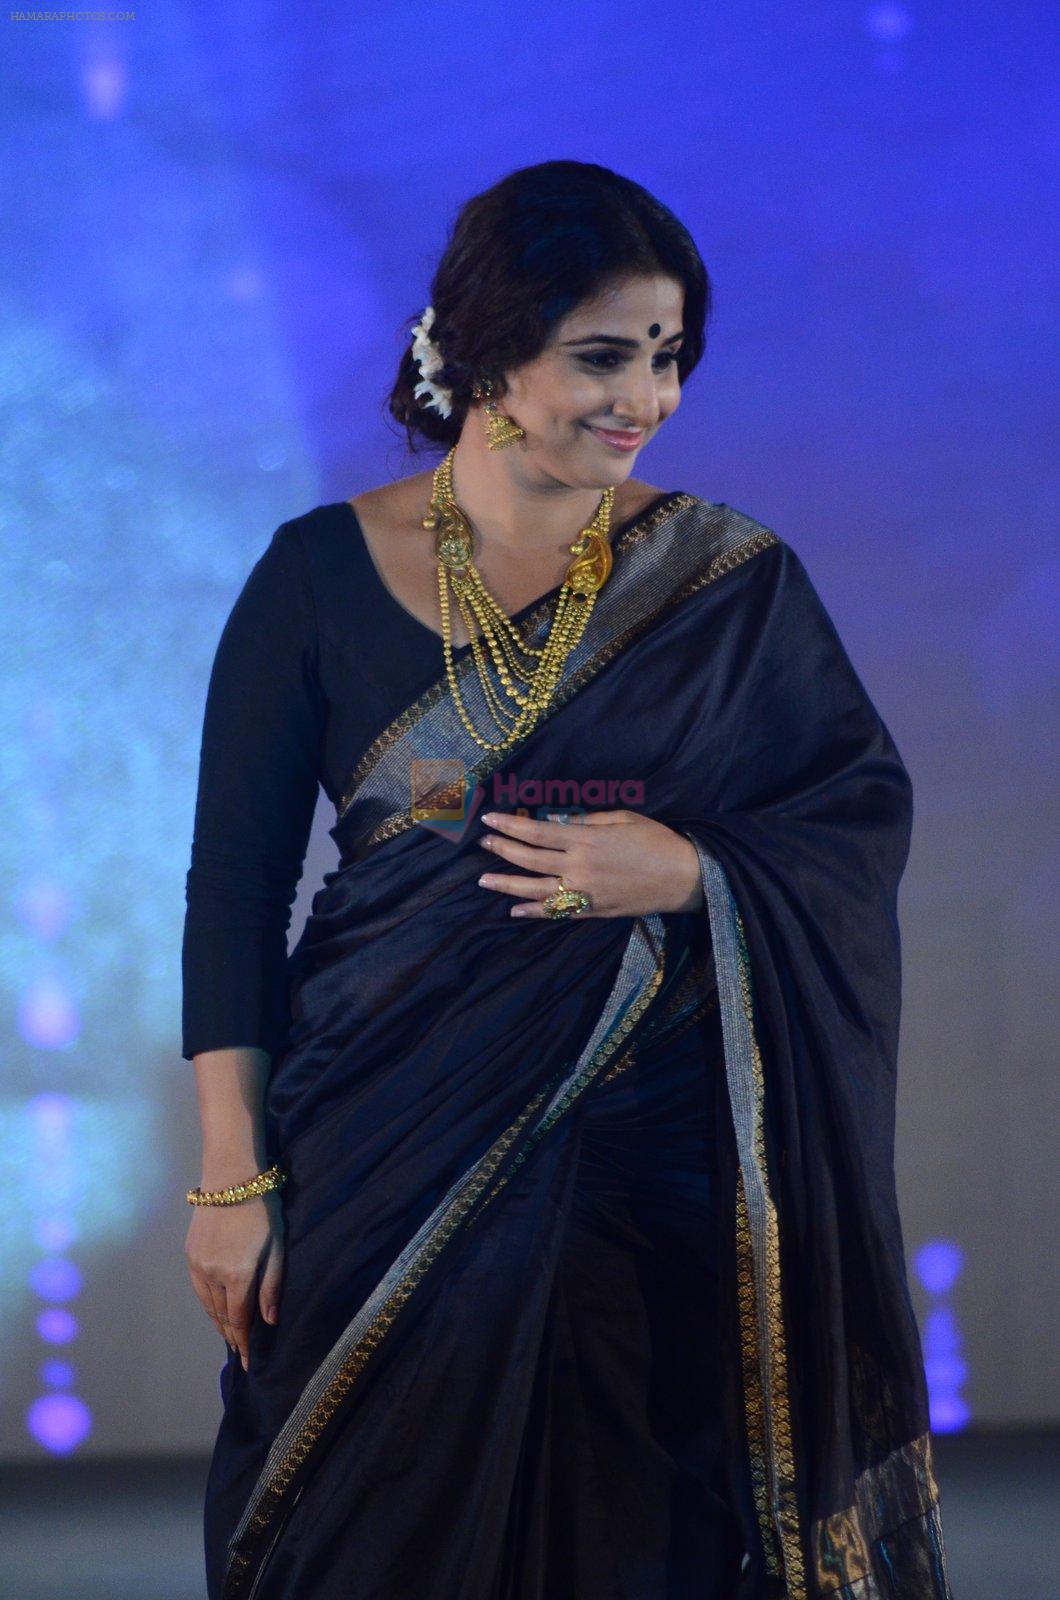 Vidya Balan at IIJS show in Mumbai on 5th Aug 2016